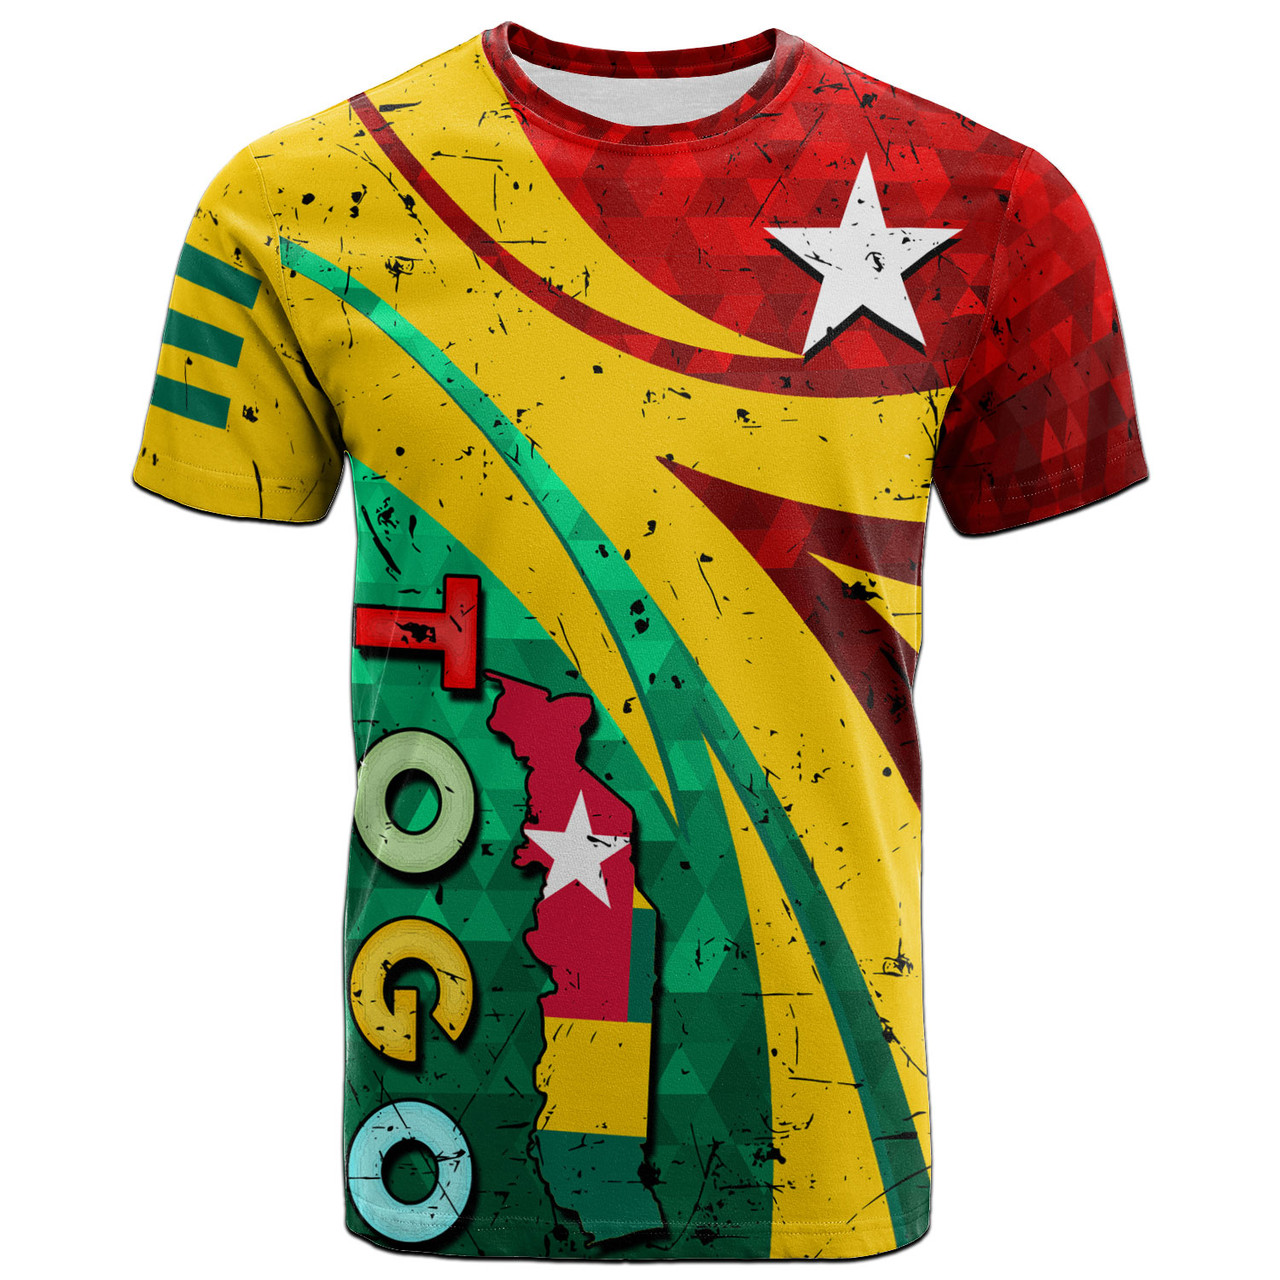 Togo T-Shirt - Togo Pride Style T-Shirt Desert Fashion 1